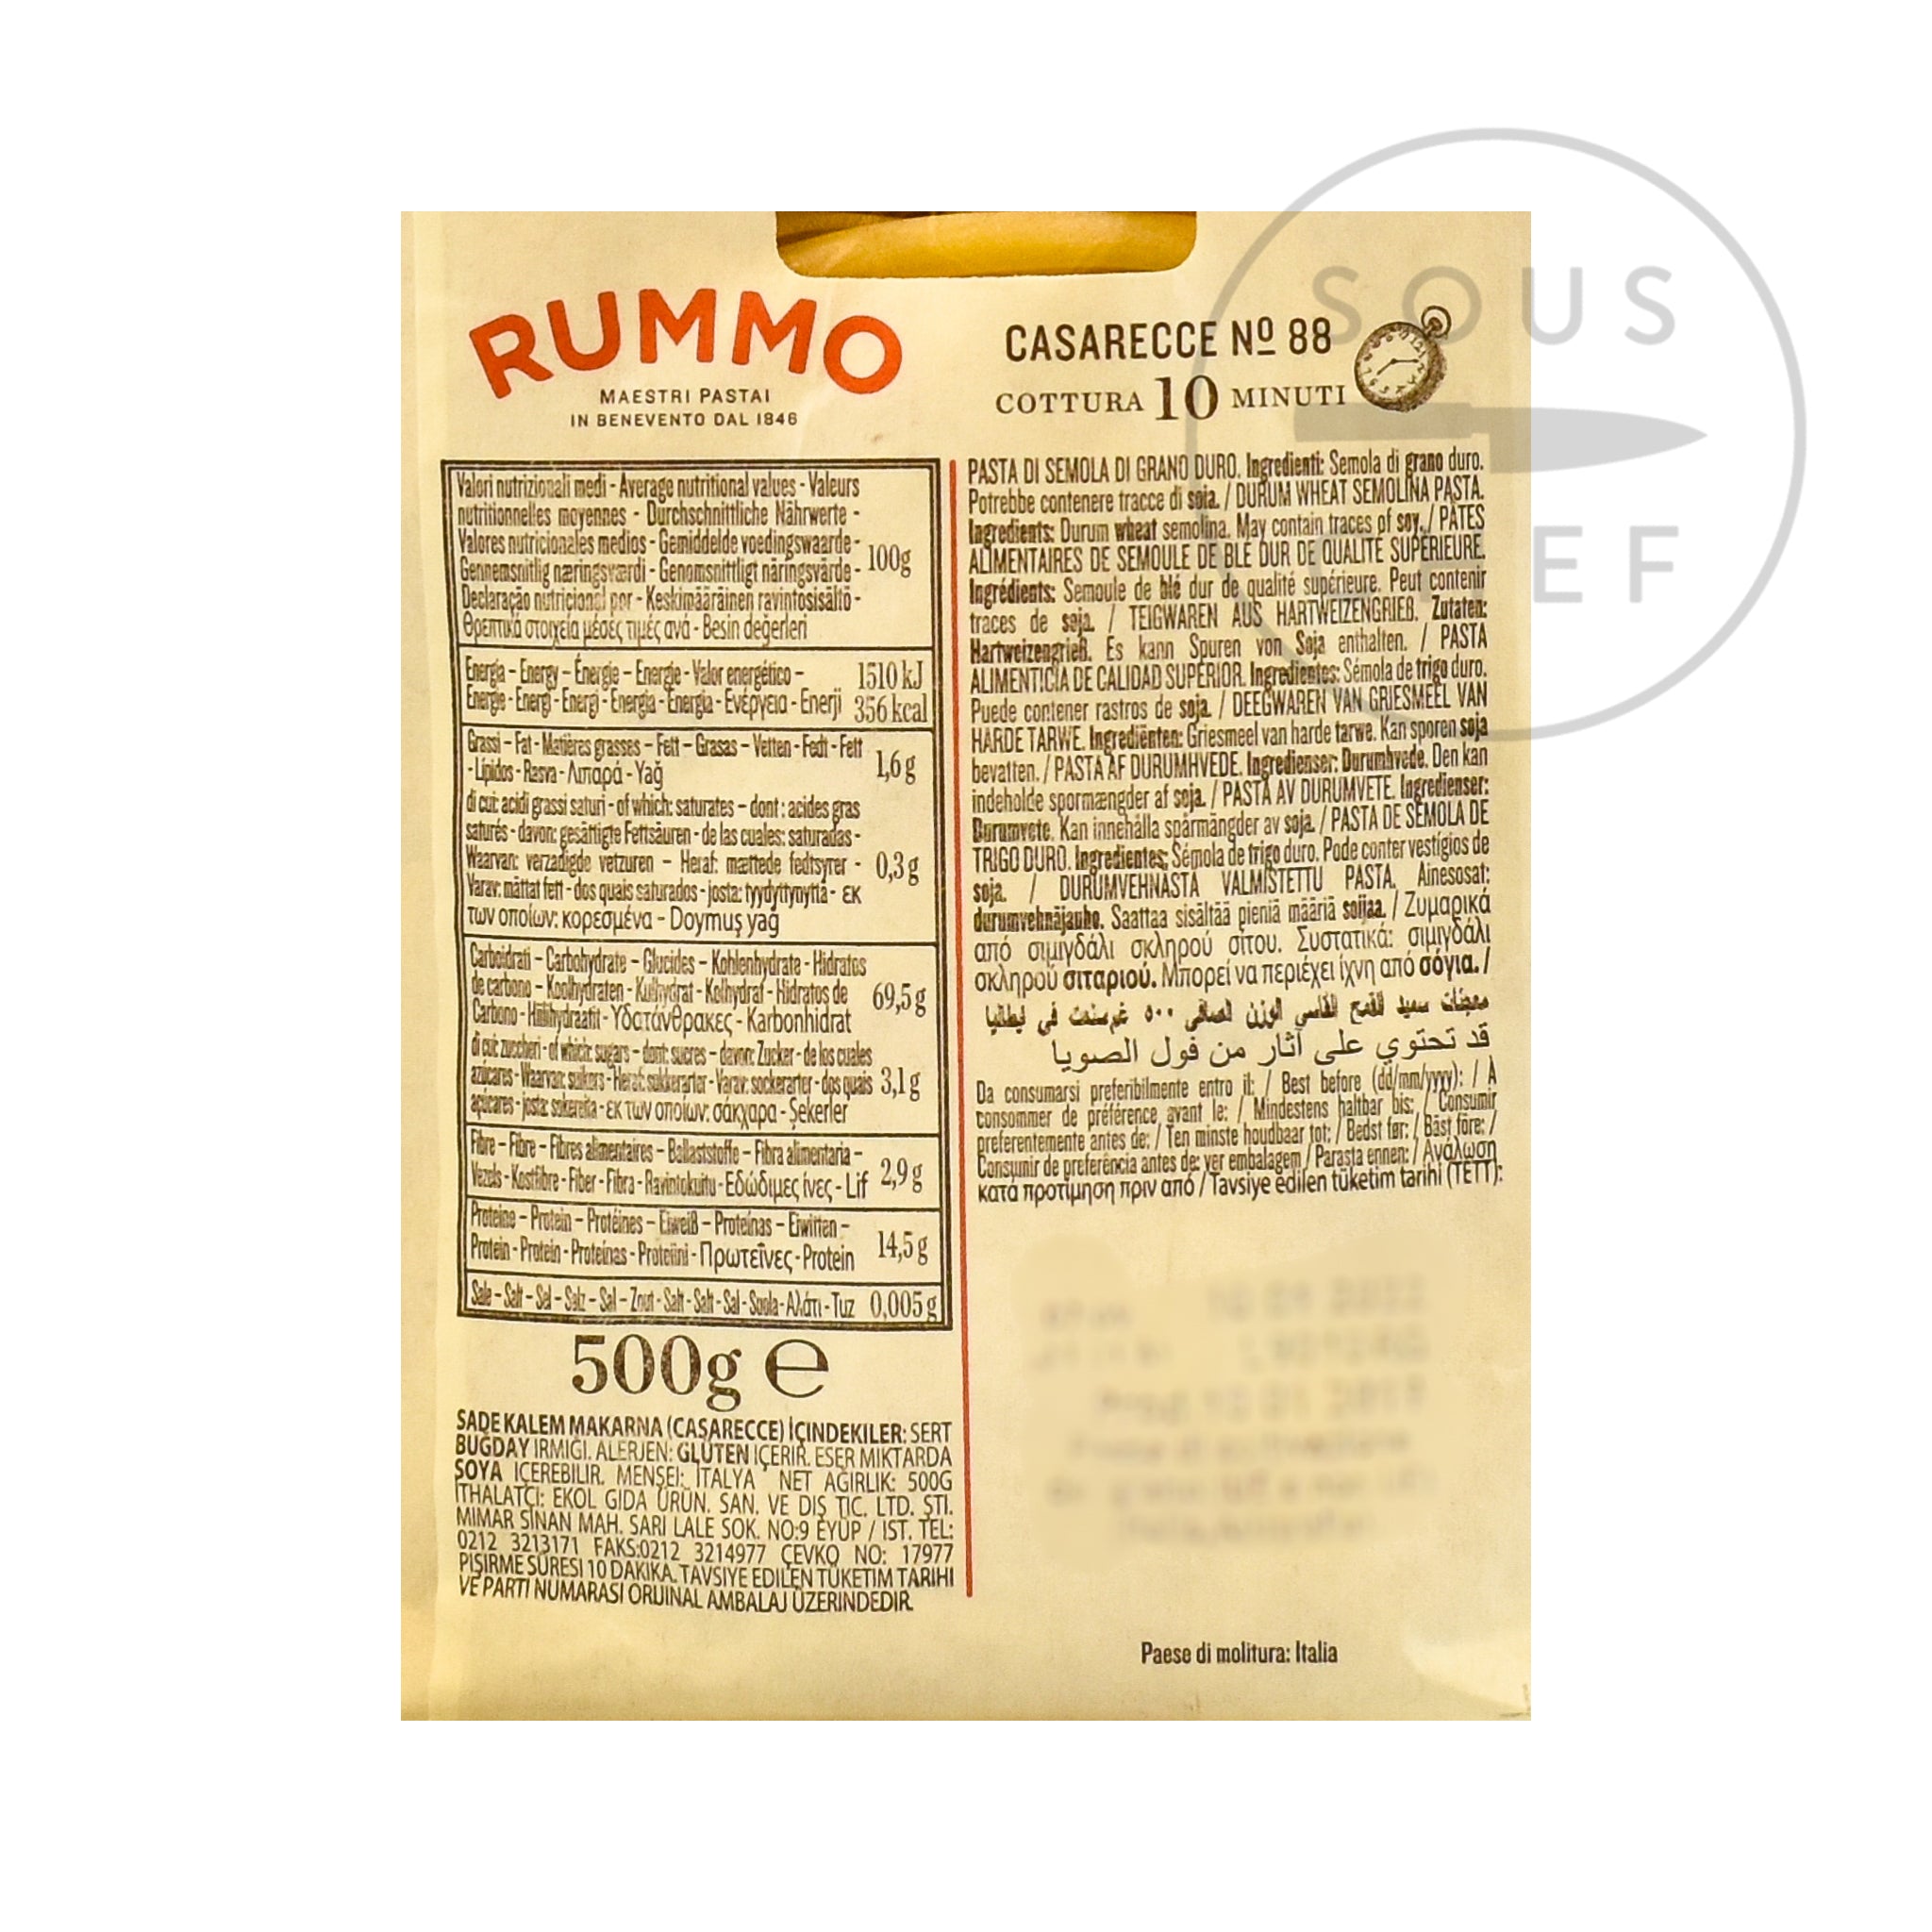 Rummo Casarecce Pasta 500g nutritional information ingredients